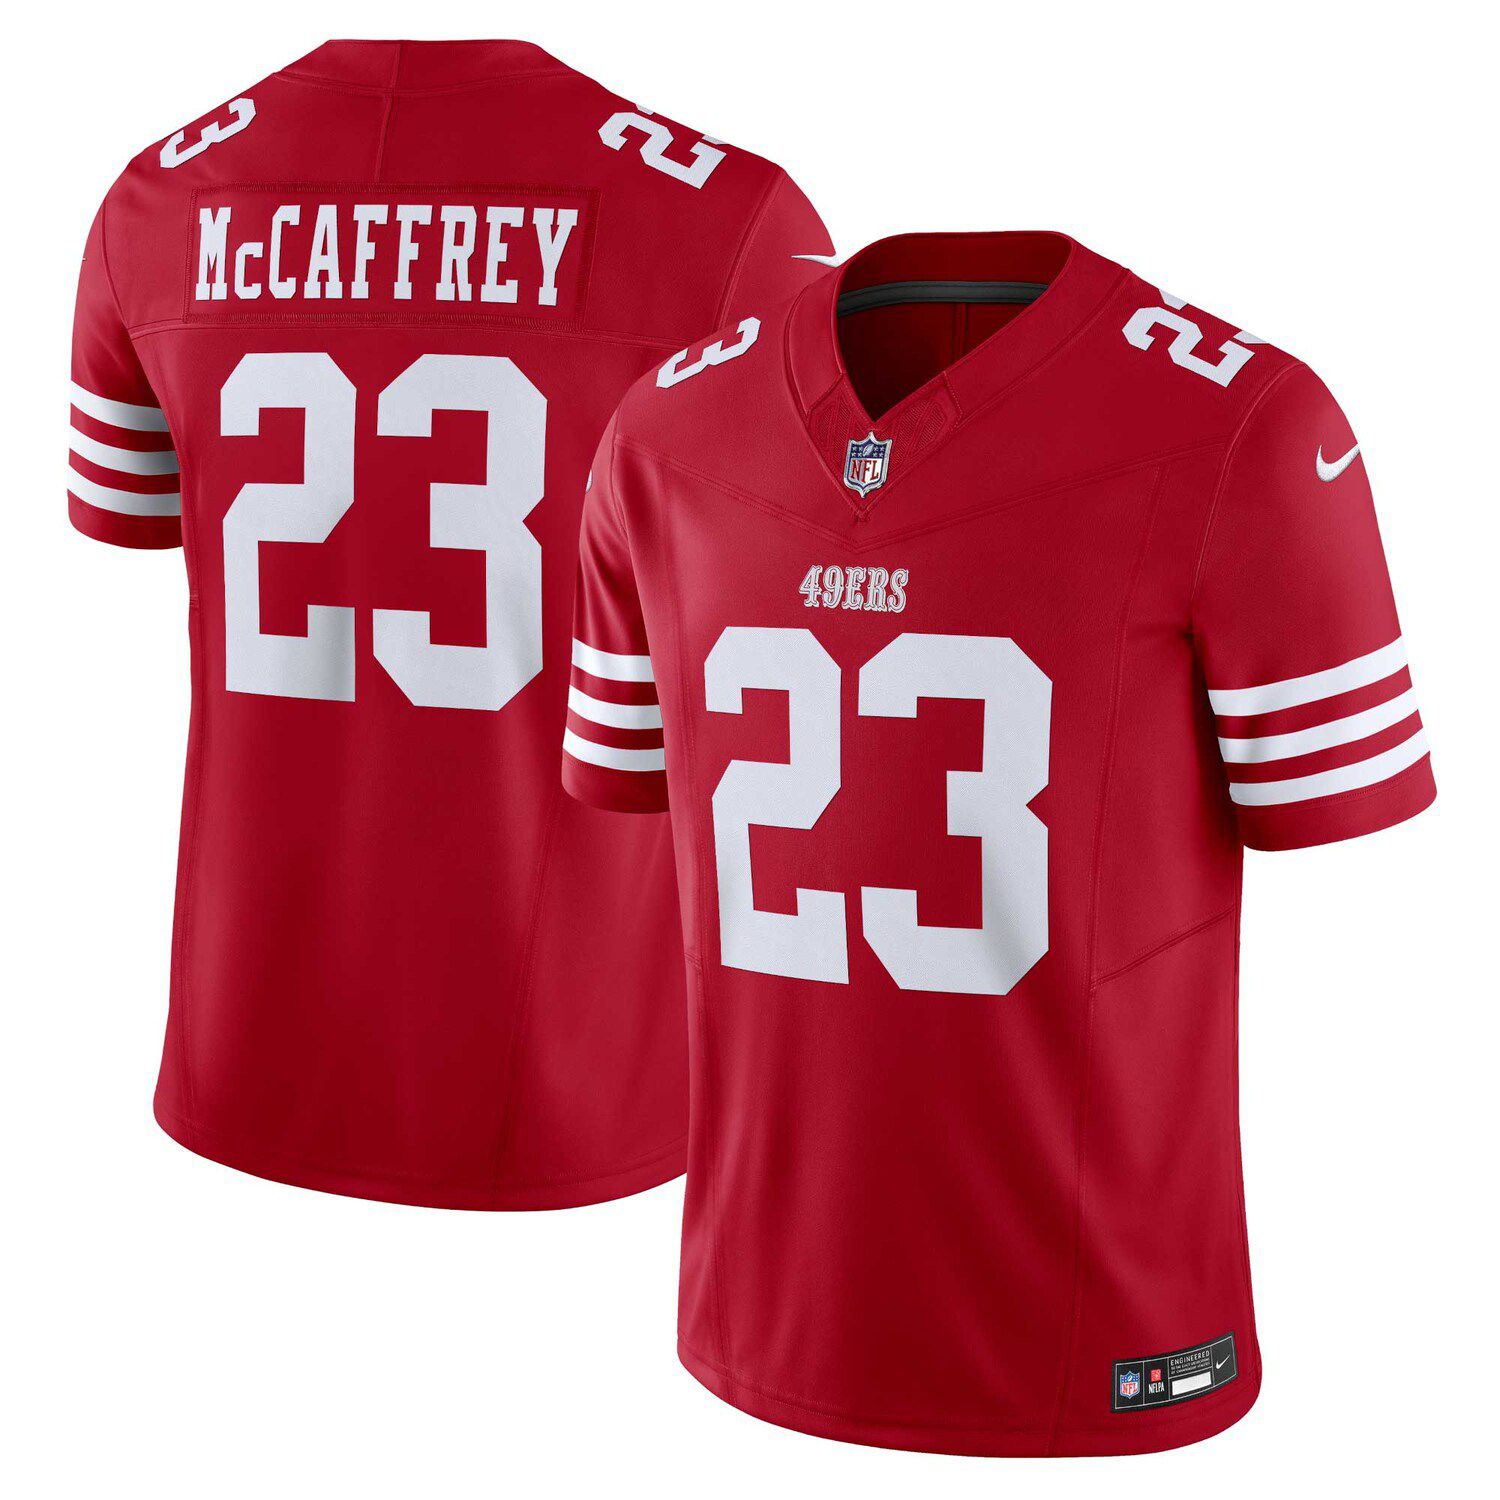 49ers mccaffrey jersey youth